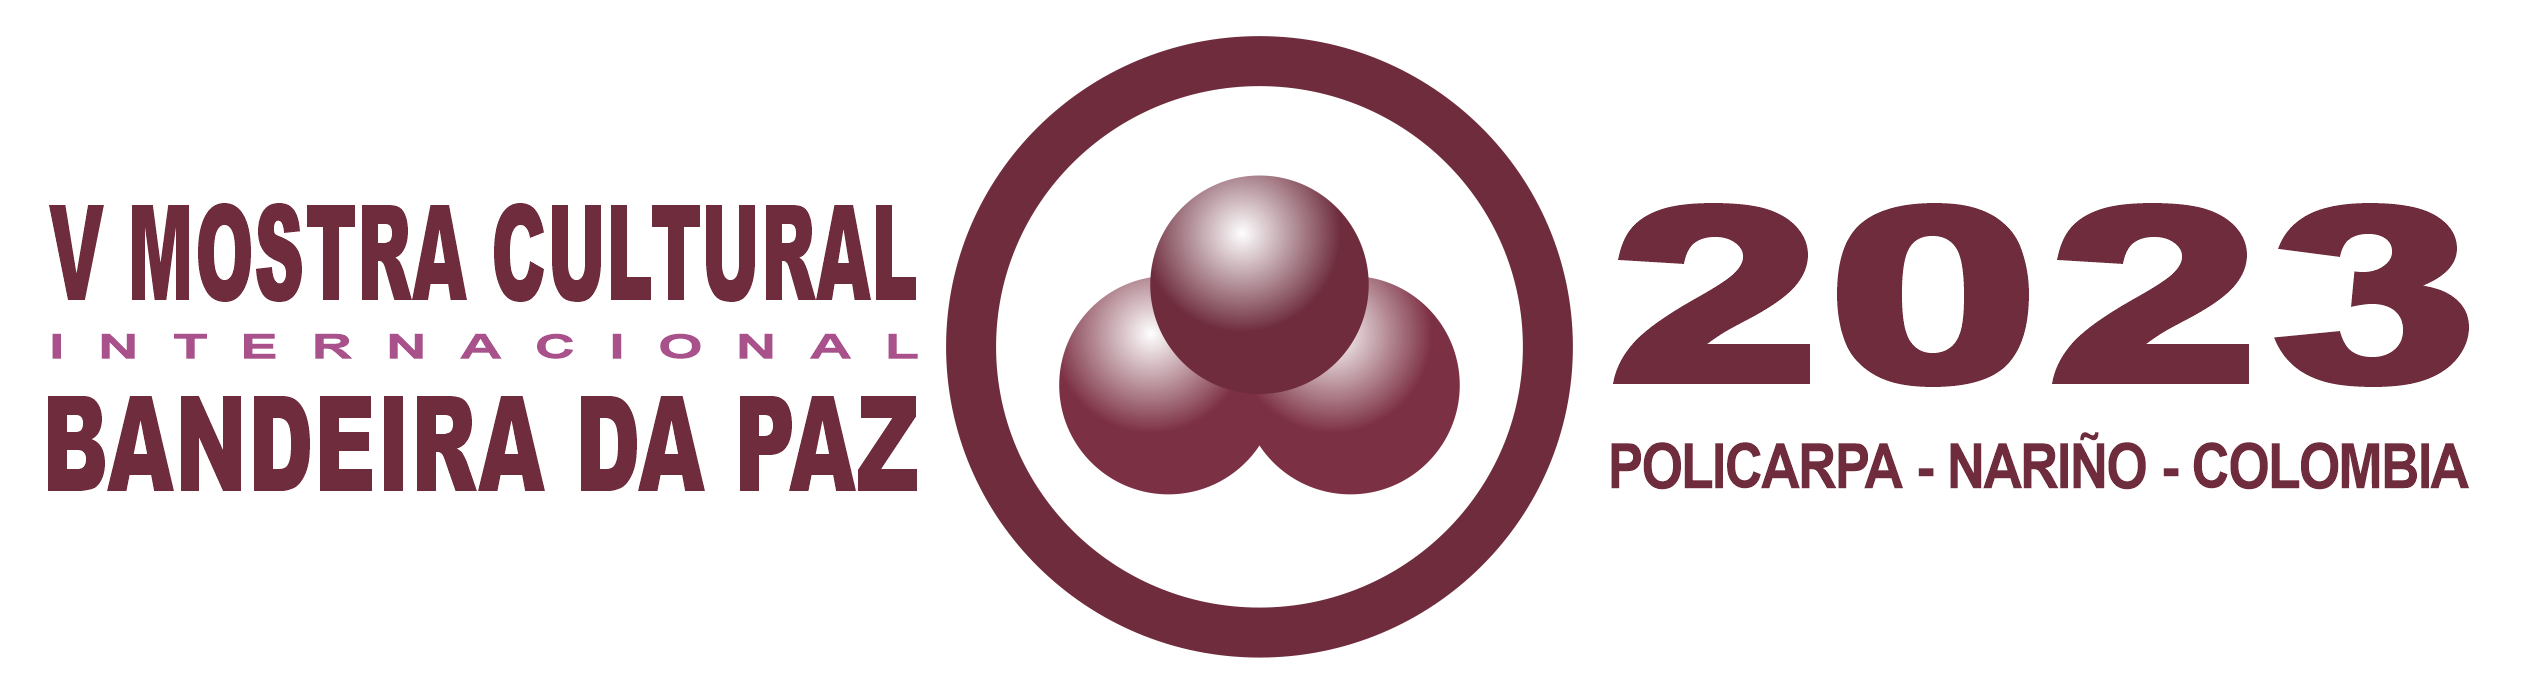 Logos IV MOSTRA 2023_POLICARPA_PNG